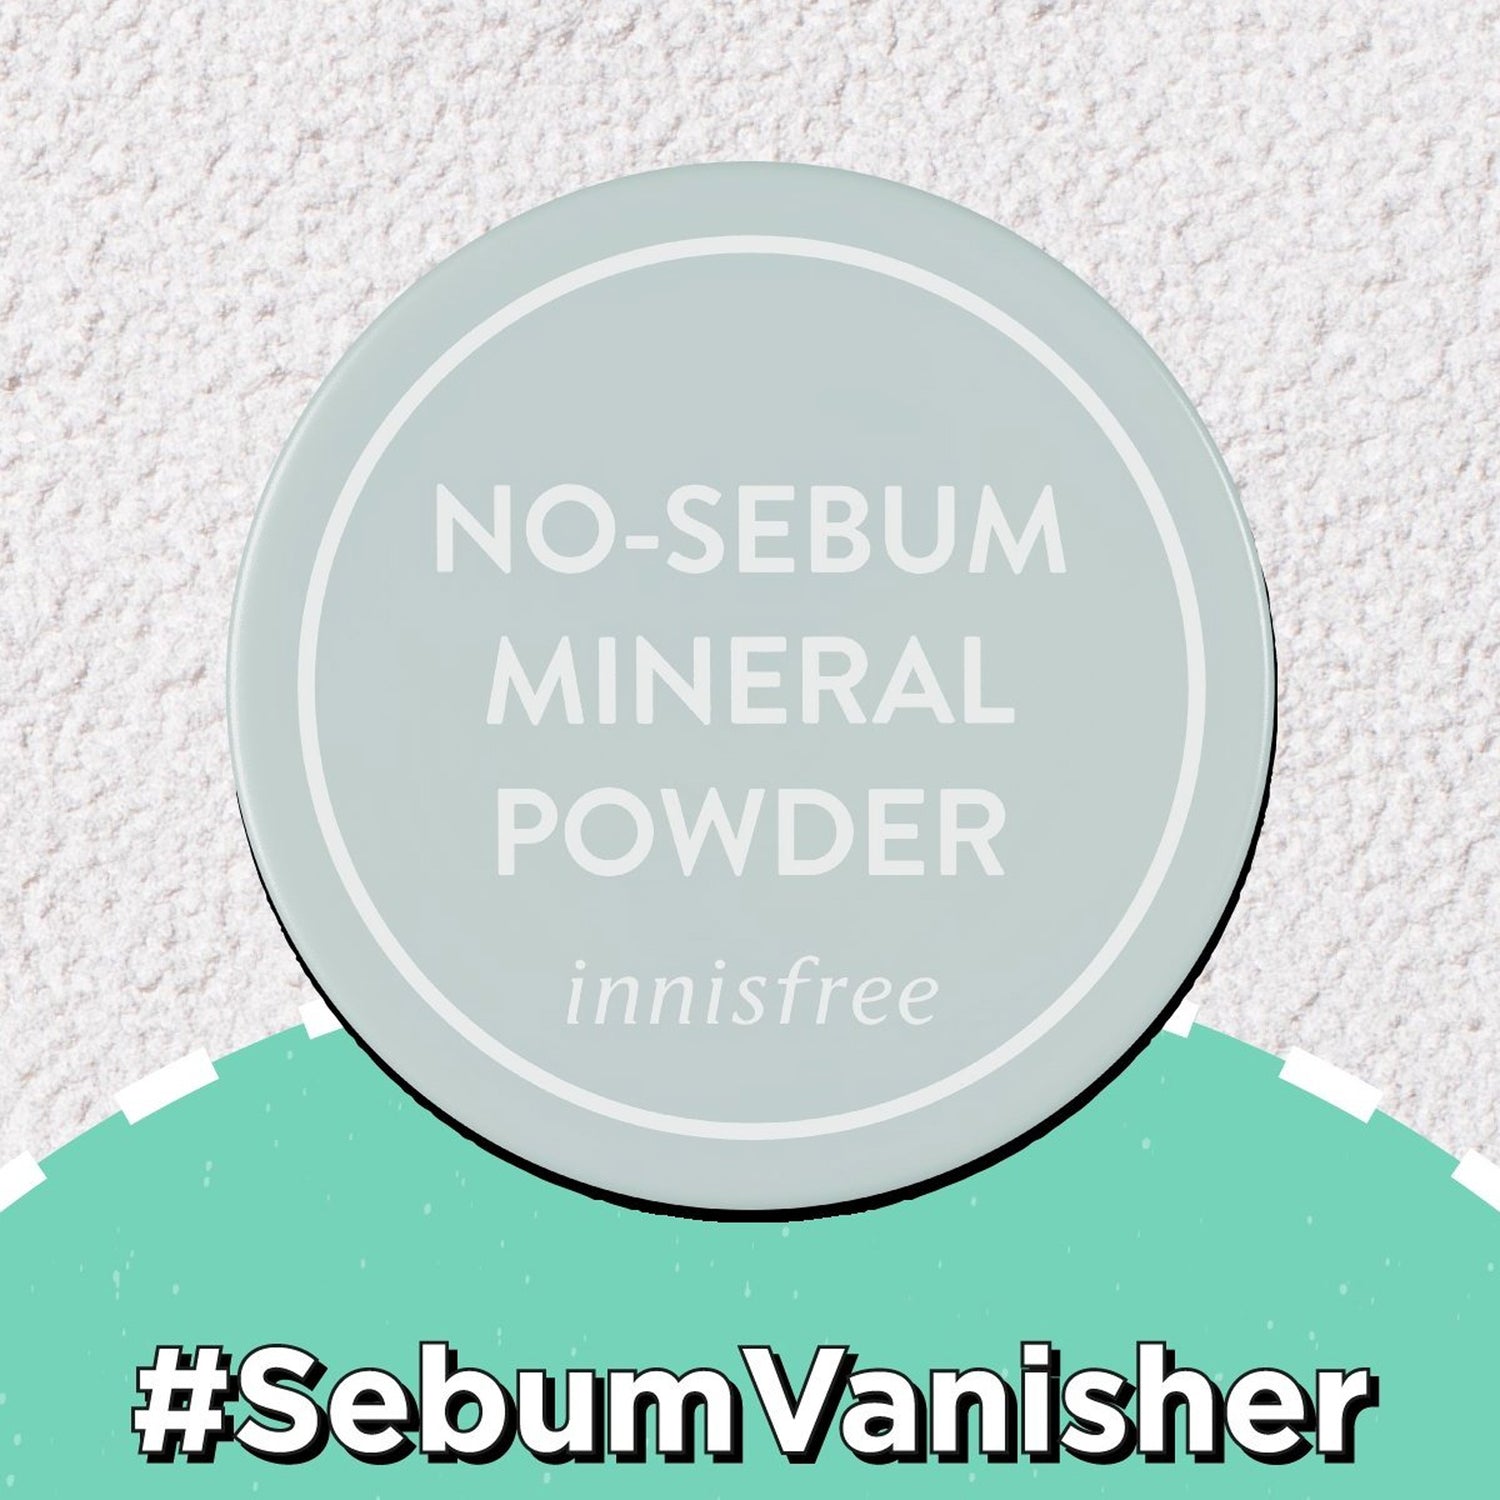 innisfree No Sebum Mineral Powder 5g